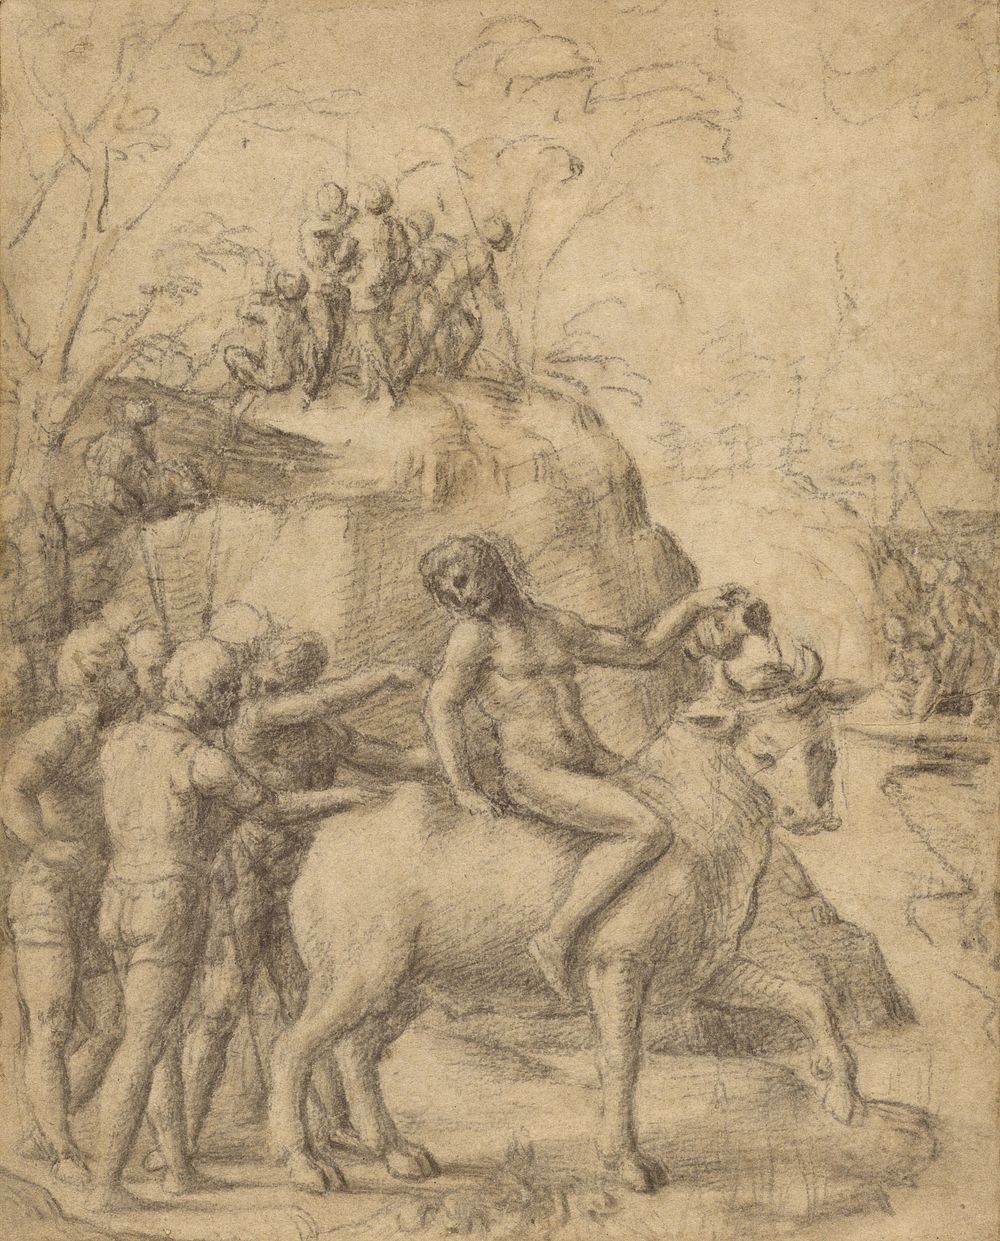 A Man Riding a Bull, and Other Figures by Correggio Antonio Allegri